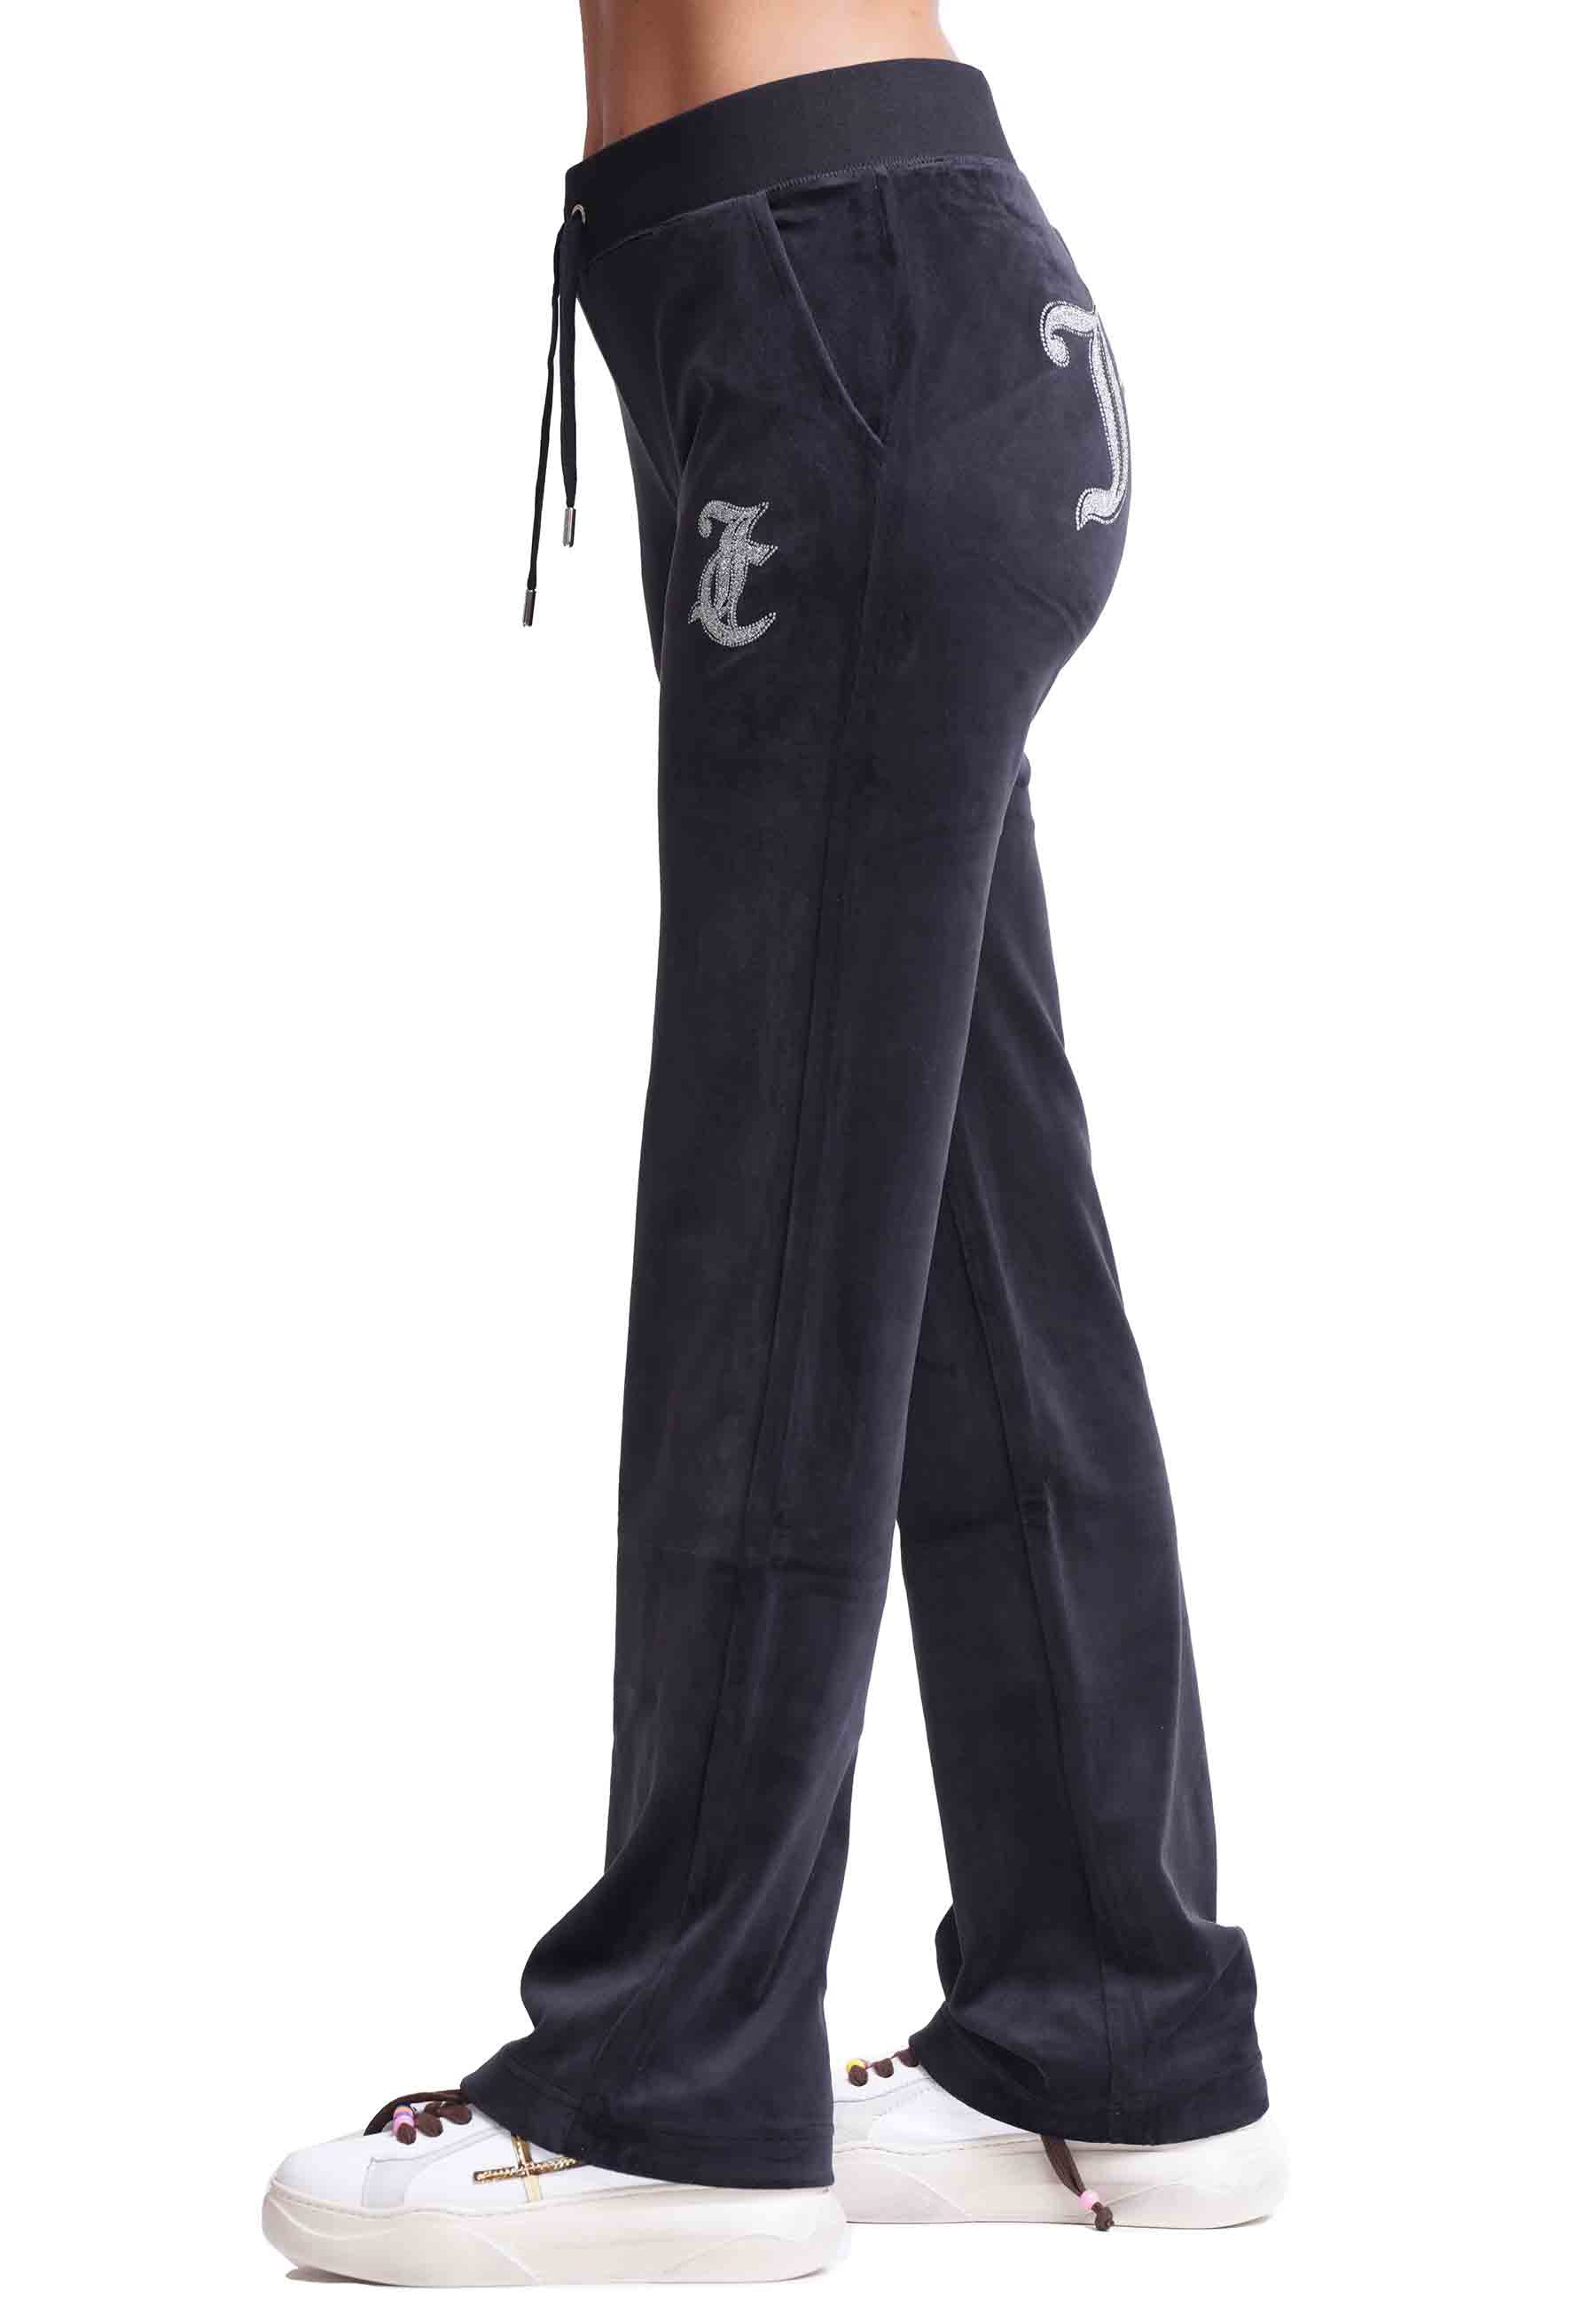 Diamond women's trousers in black velvet with rhinestones